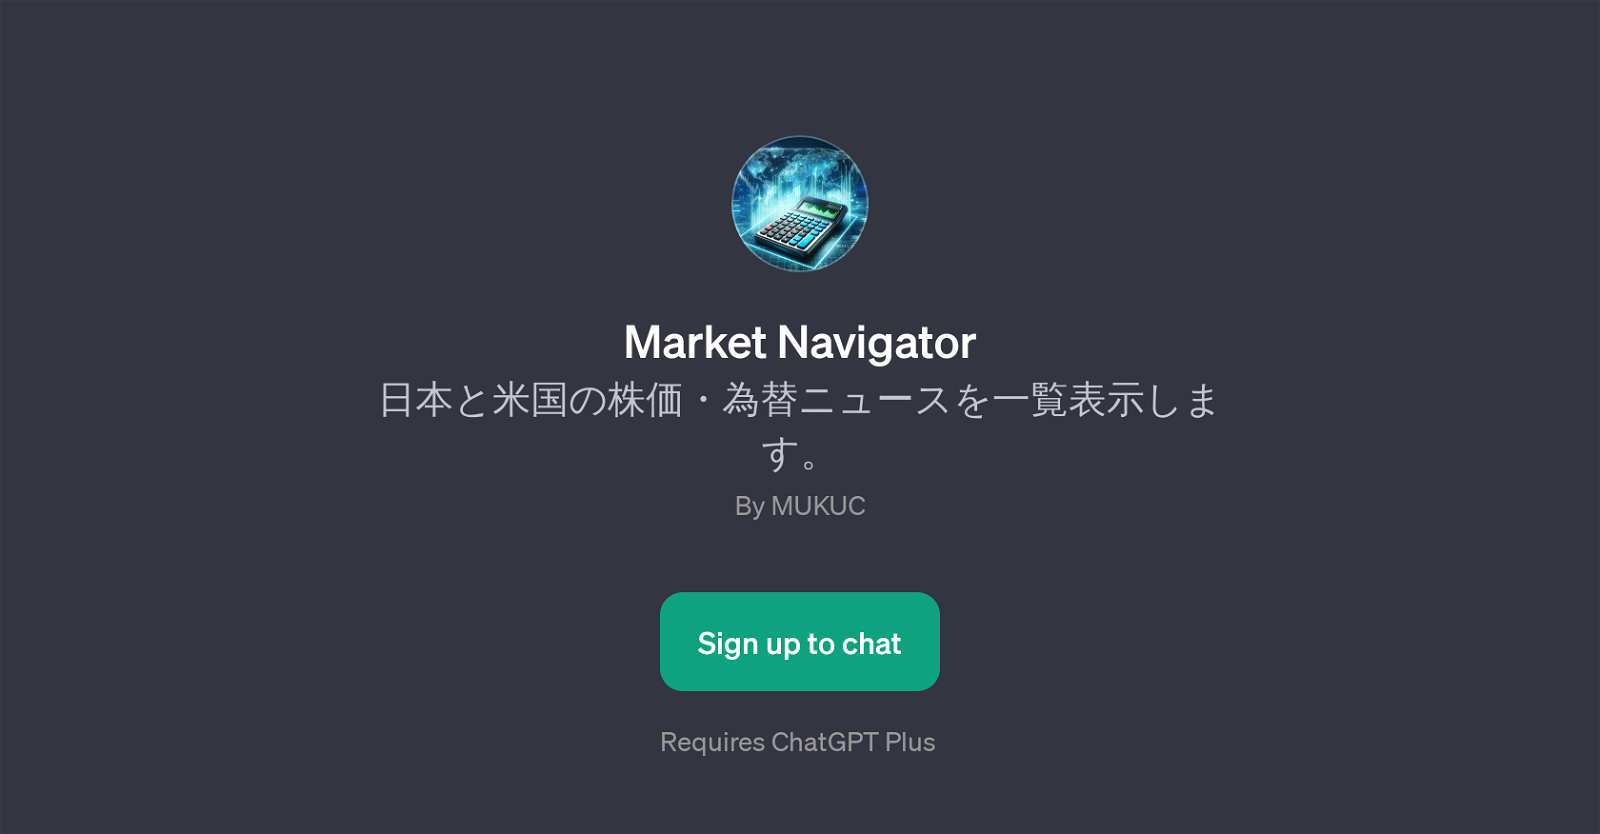 Market Navigator website